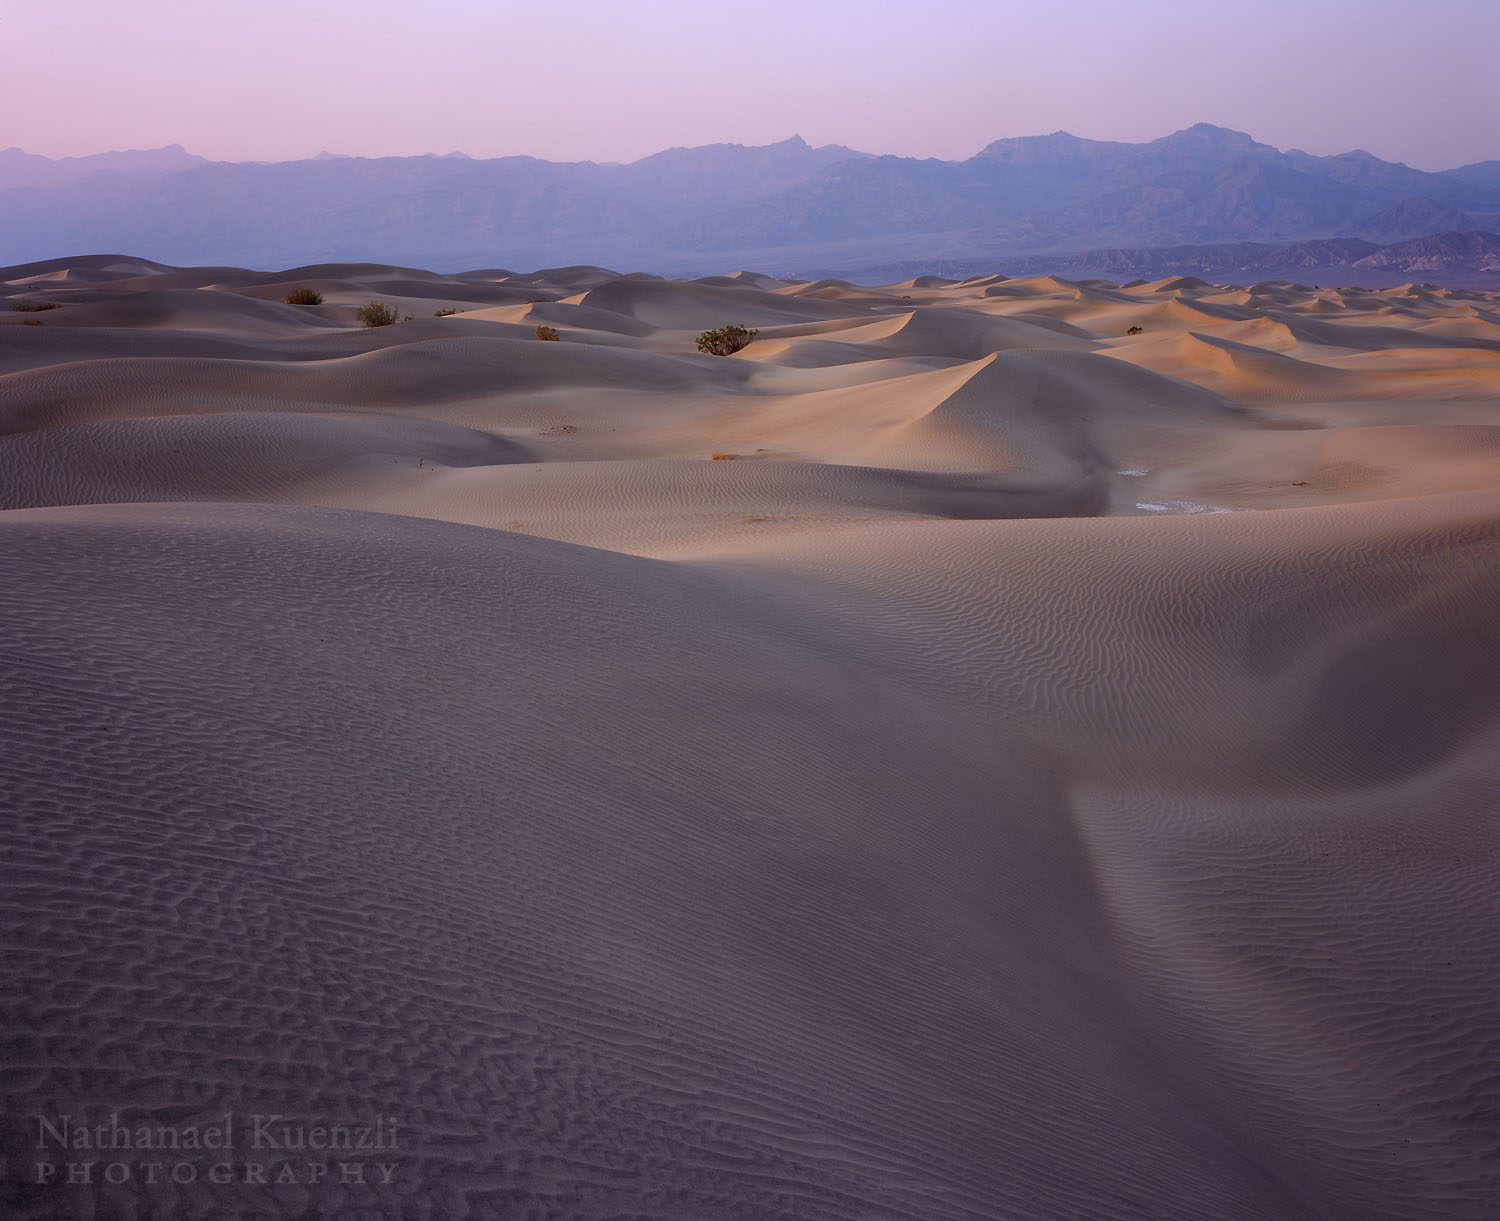   Sand Dunes, Death Valley National Park, California, April 2008  